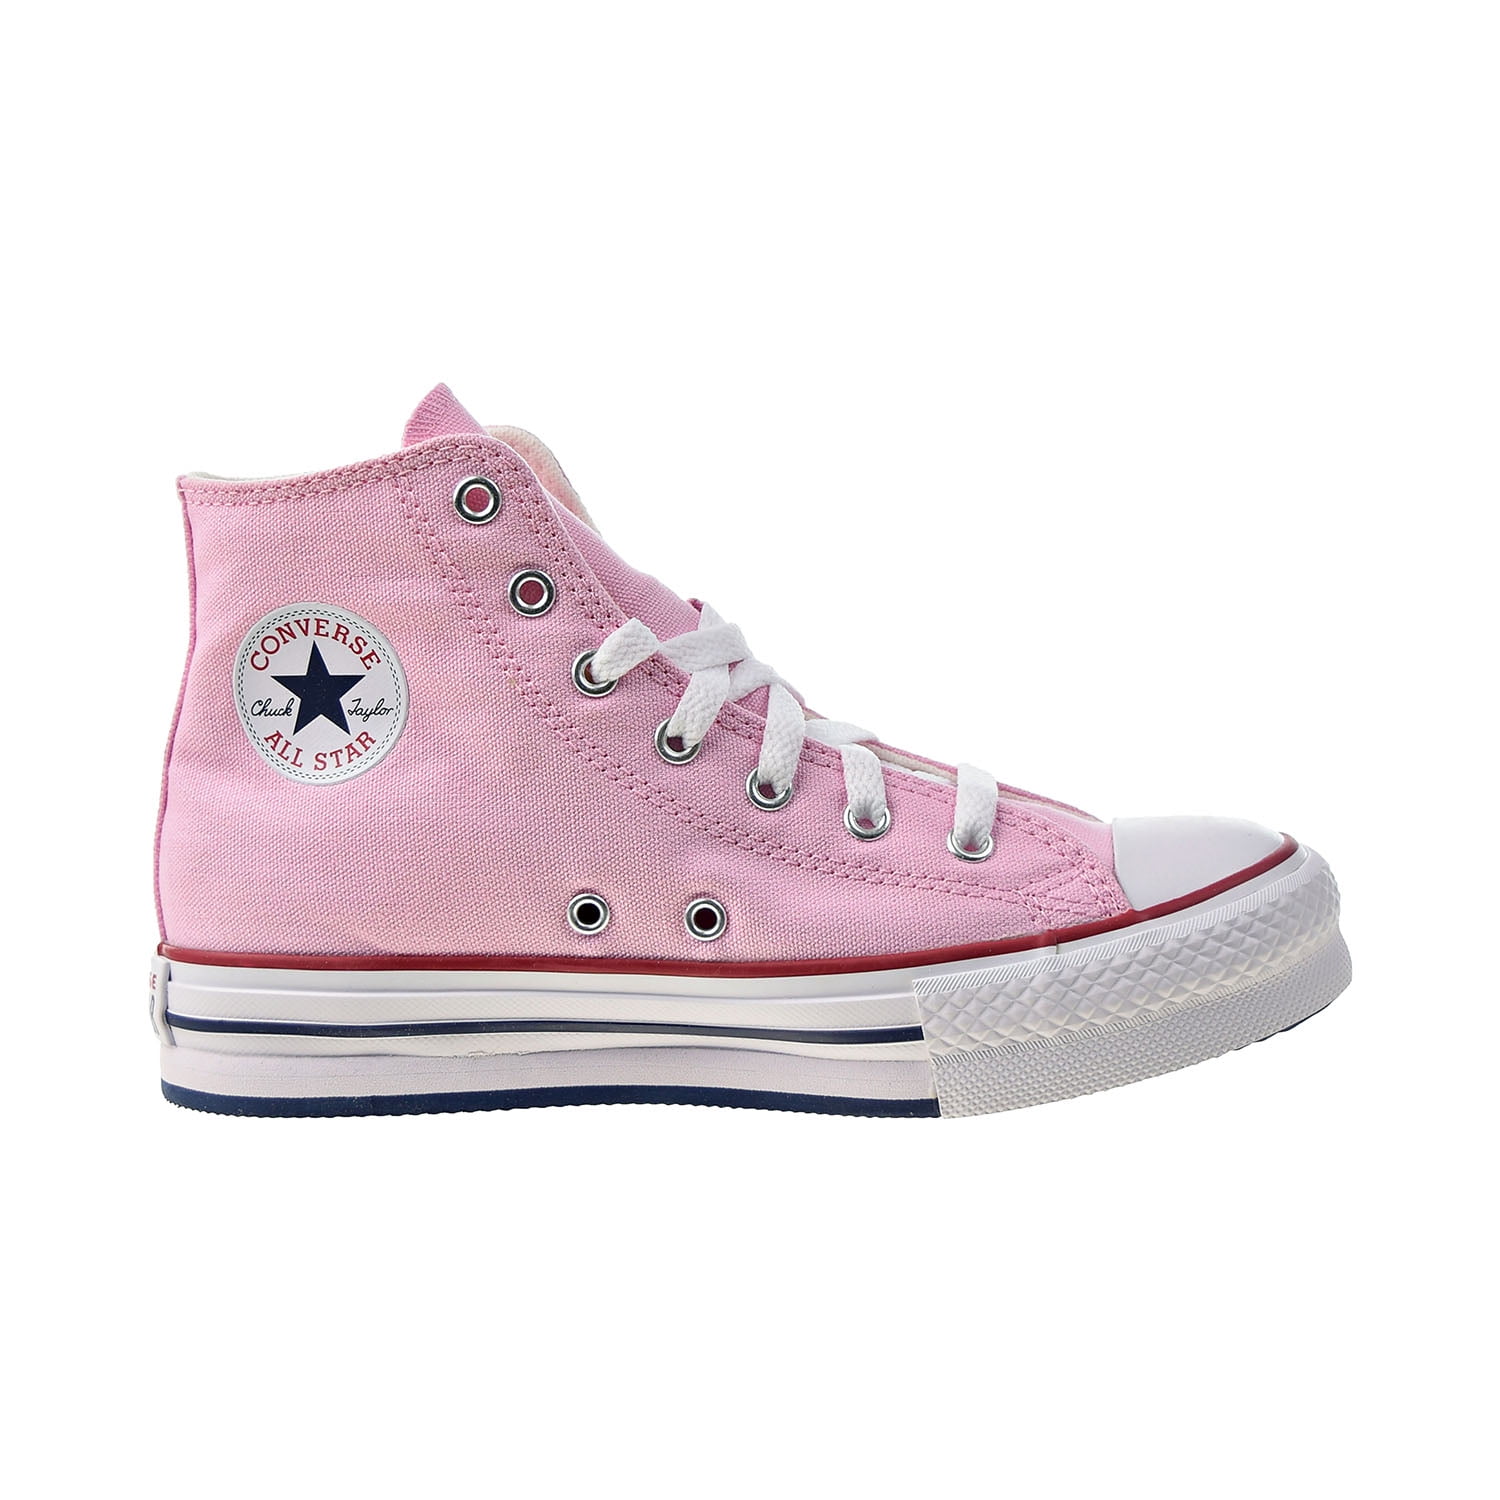 Converse All Star EVA Lift Hi Kids' Platform Shoes Pink Glaze-White 671106c - Walmart.com